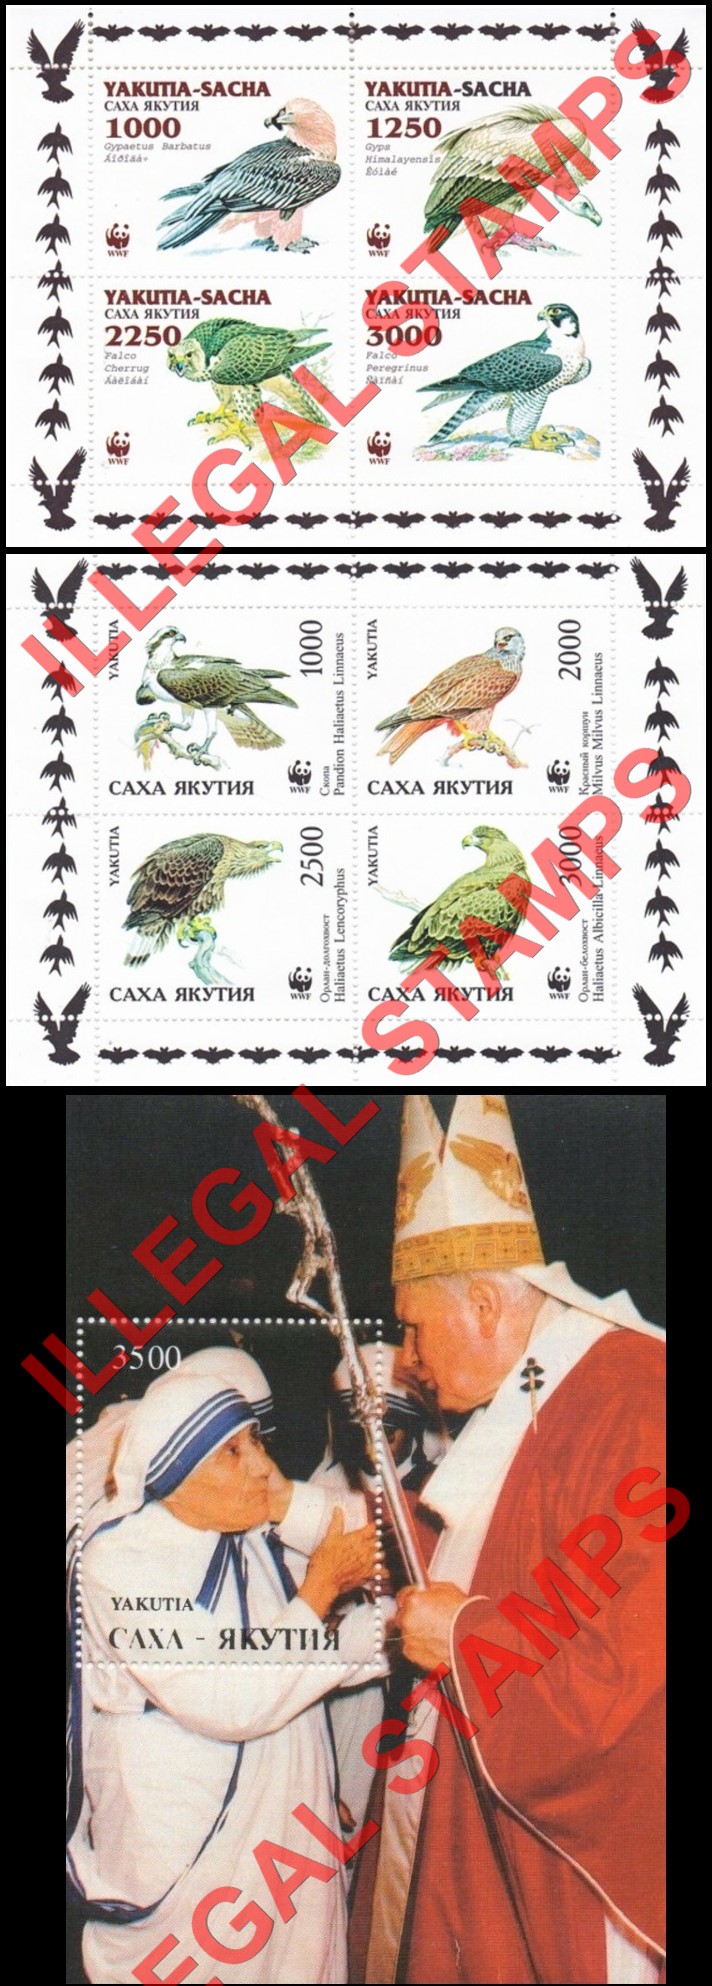 Republic of Sakha Yakutia 1998 Counterfeit Illegal Stamps (Part 3)